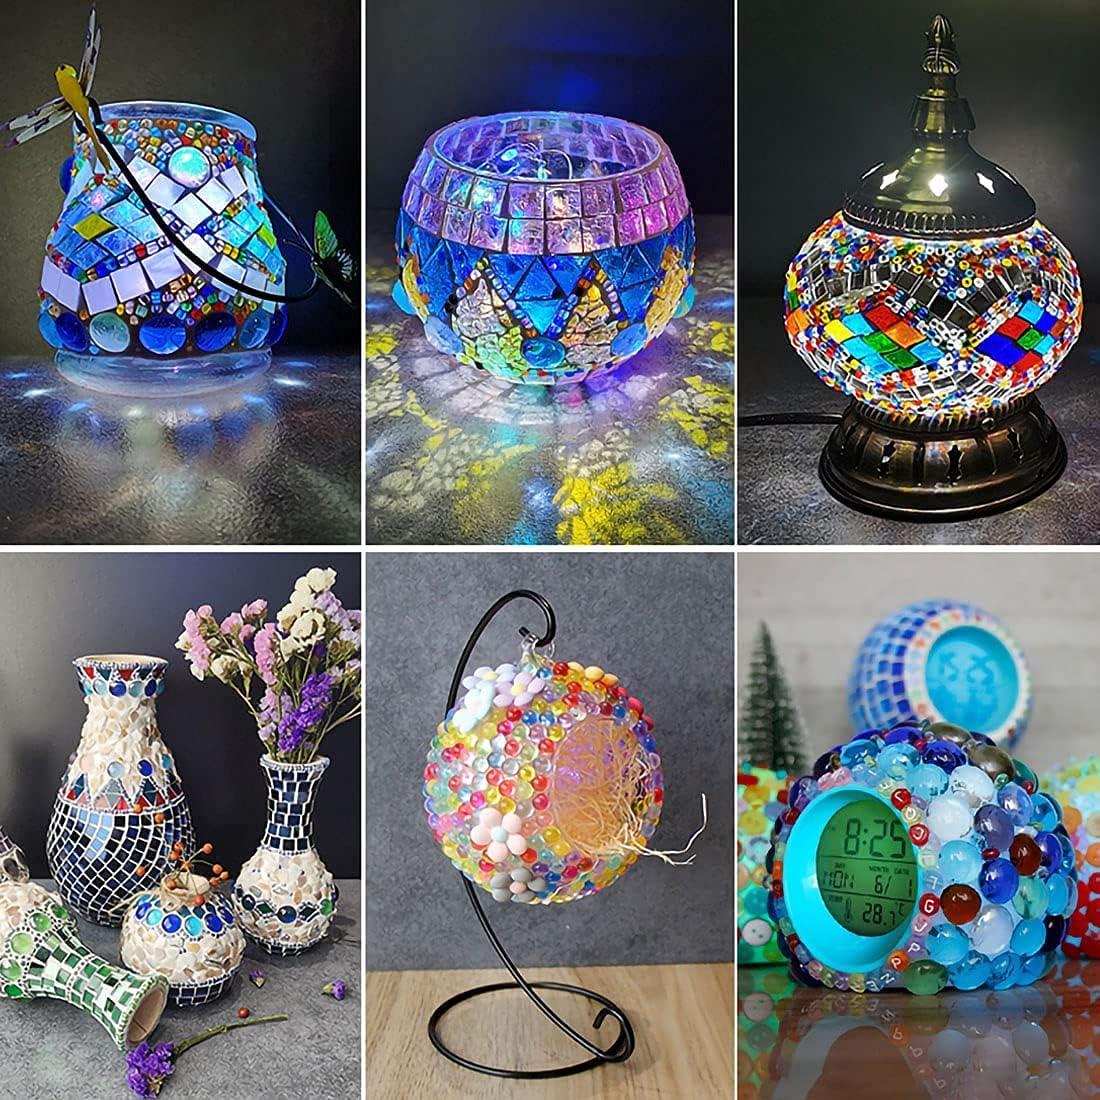 Decorative Glass Stones Flat Glass Marbles for Aquarium - China Vase Filler  Glass Beads, Flat Gems Aquarium